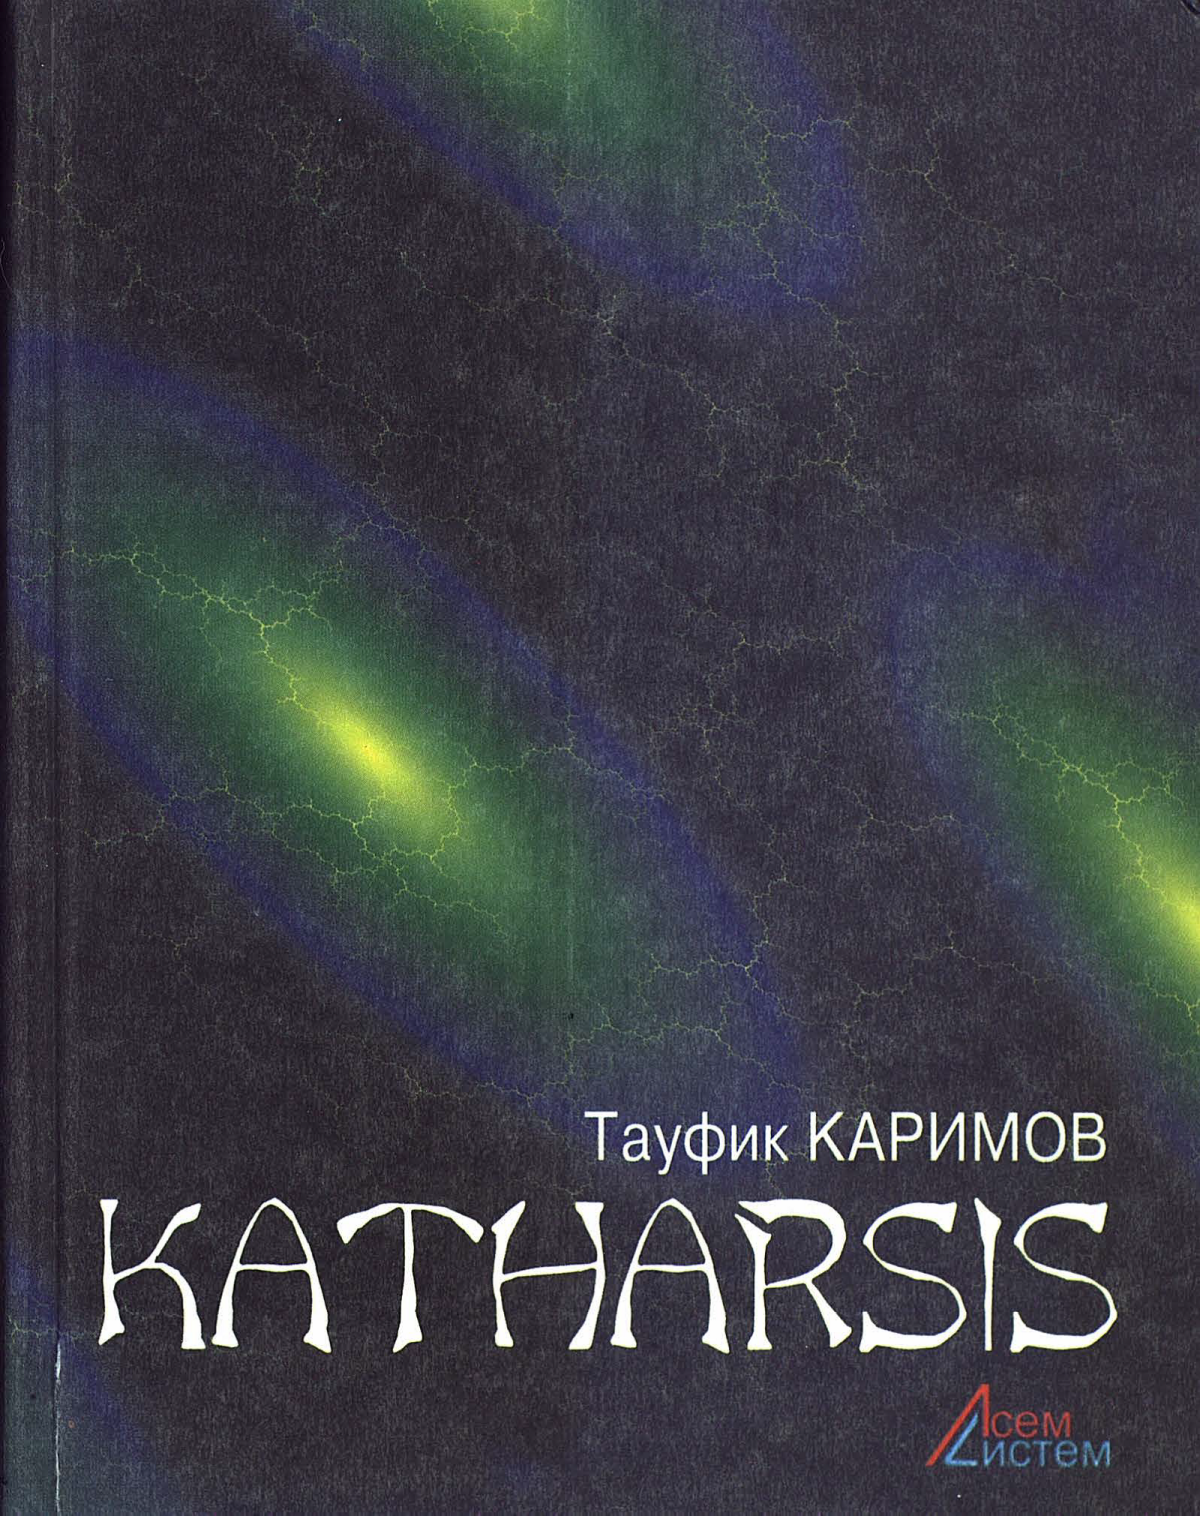 Katharsis 